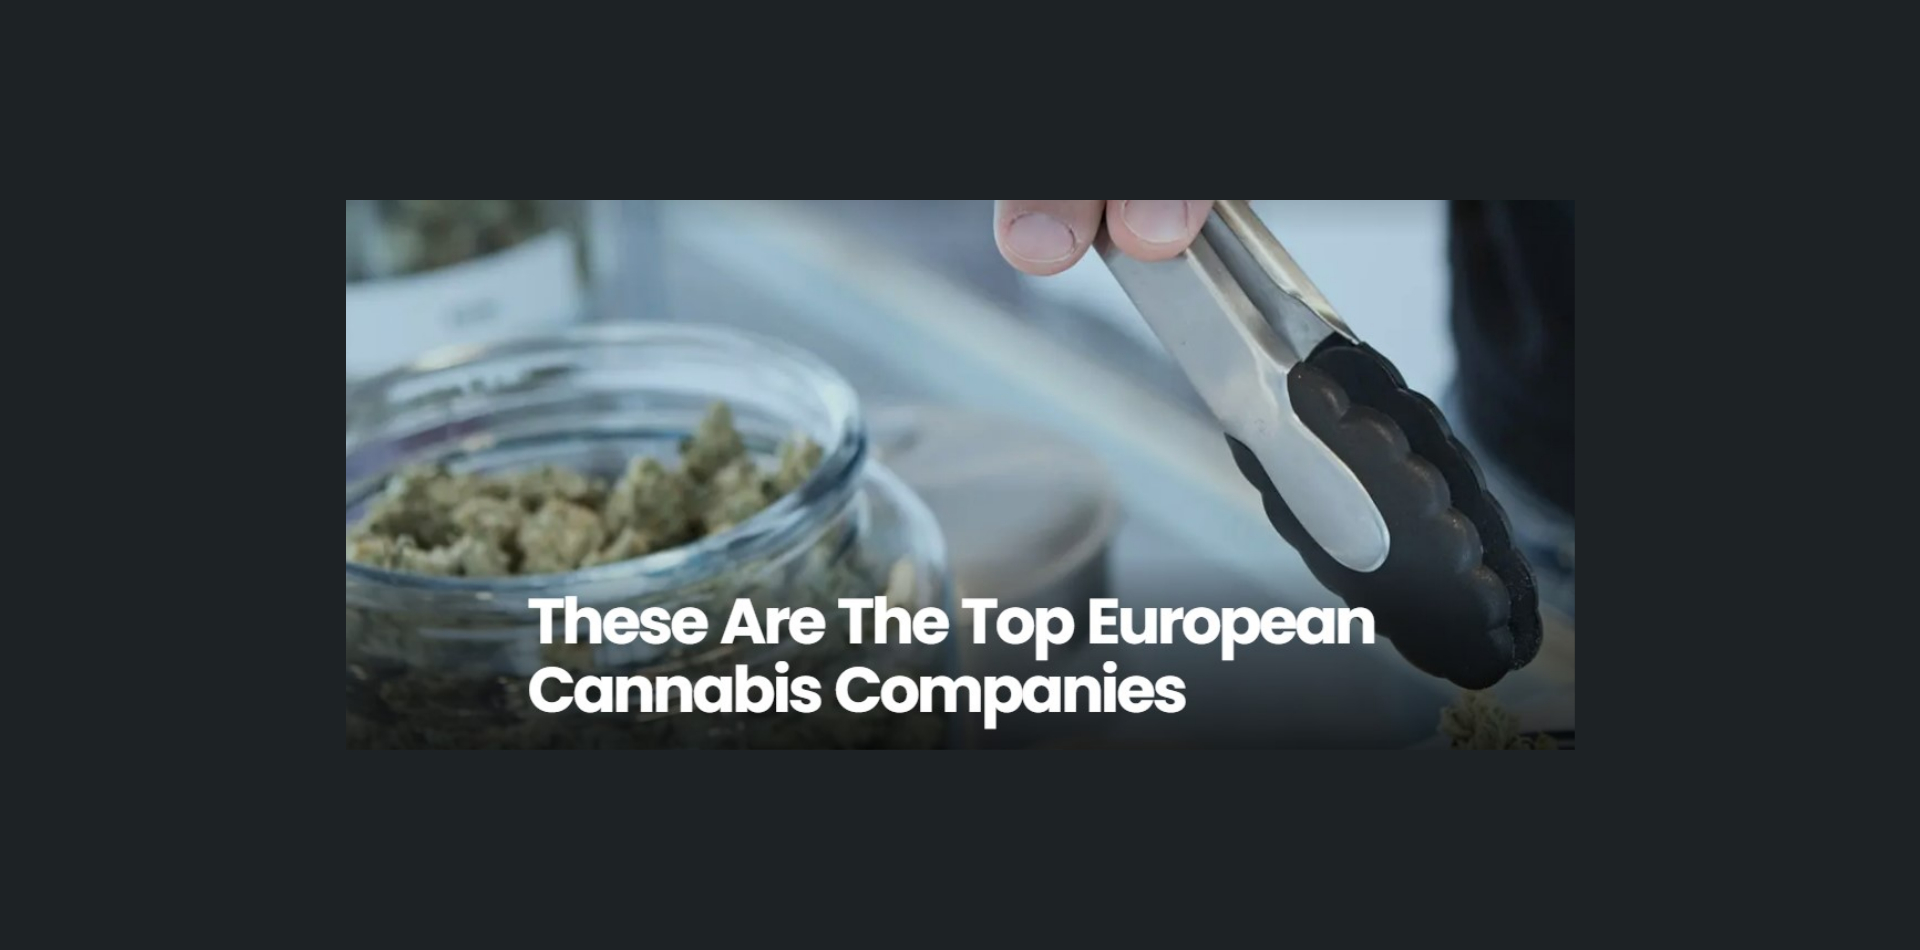 These Are The Top European Cannabis Companies